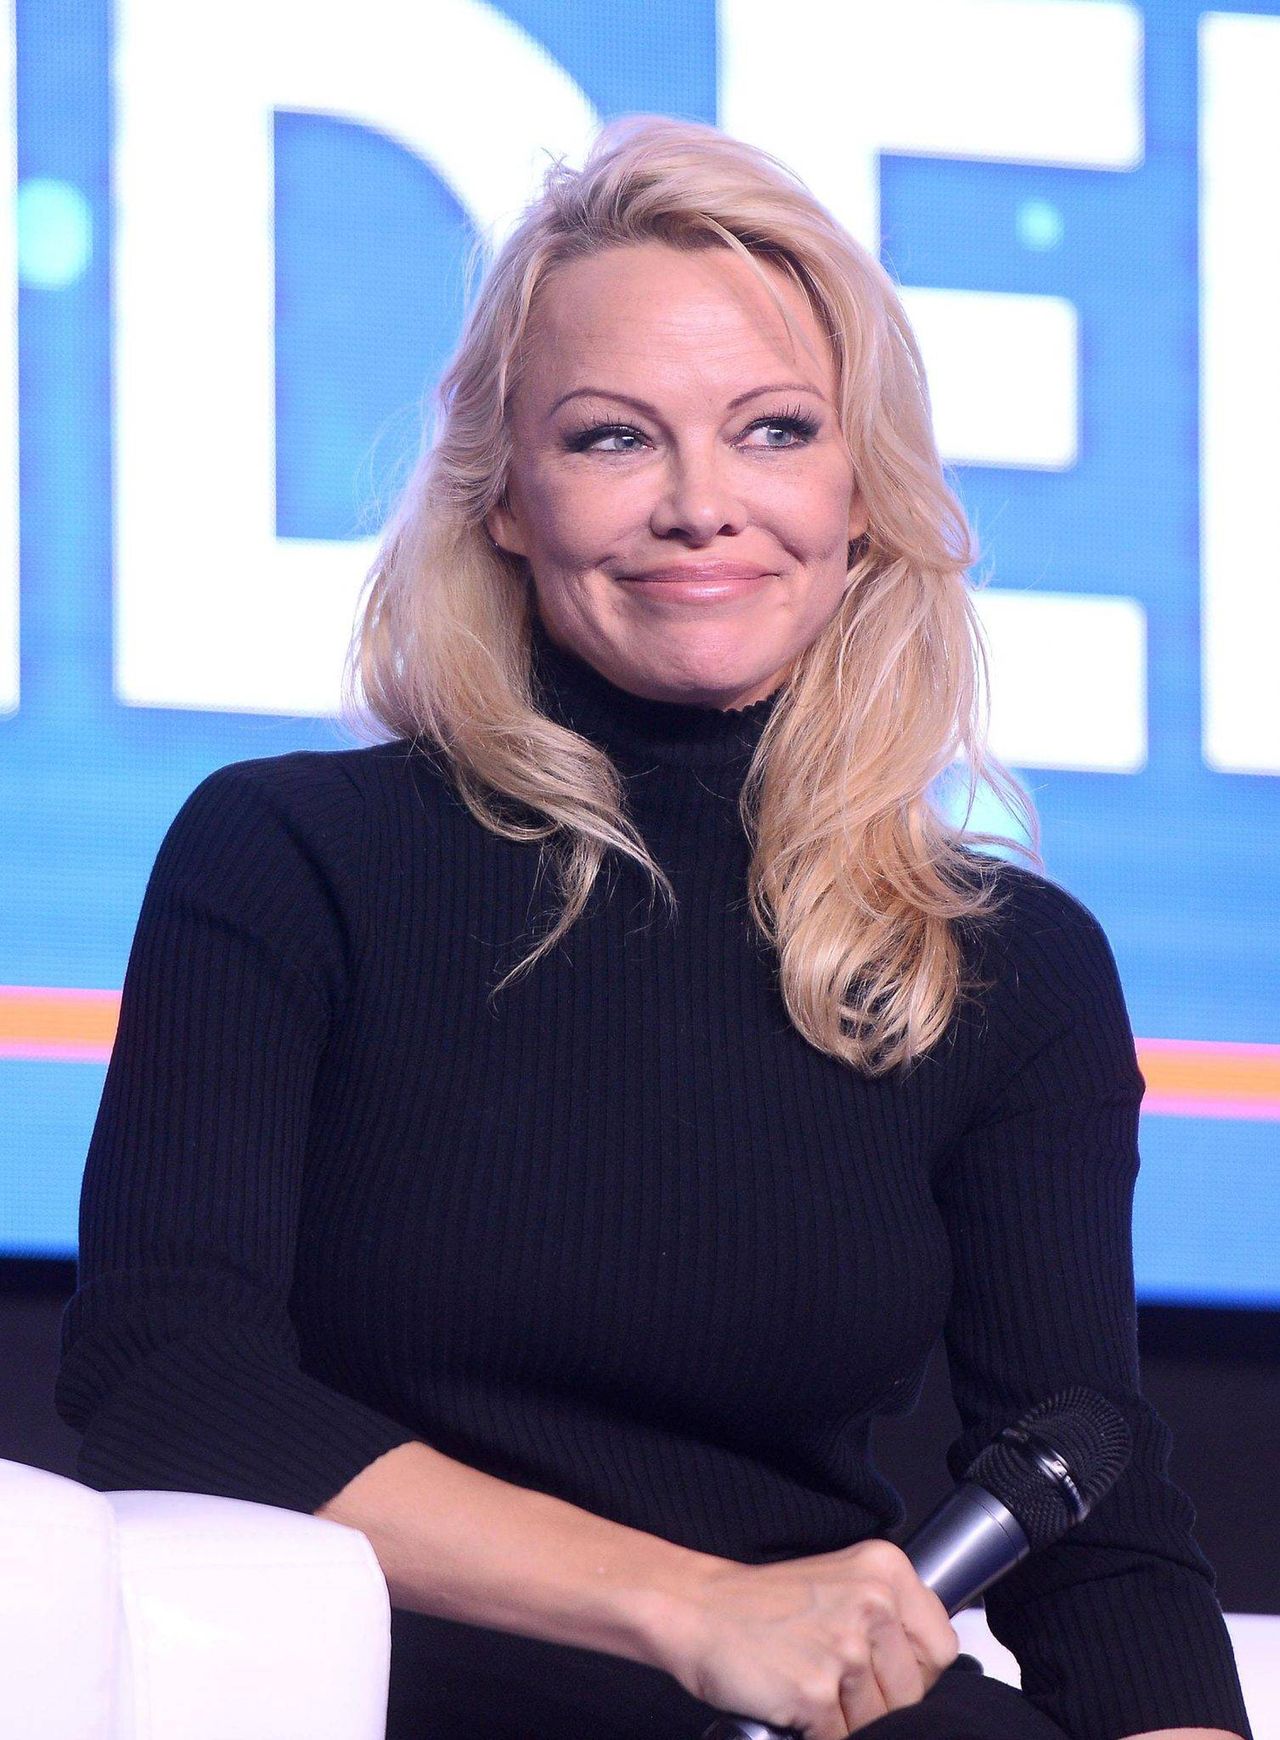 Pamela Anderson na Warsaw Comic Con